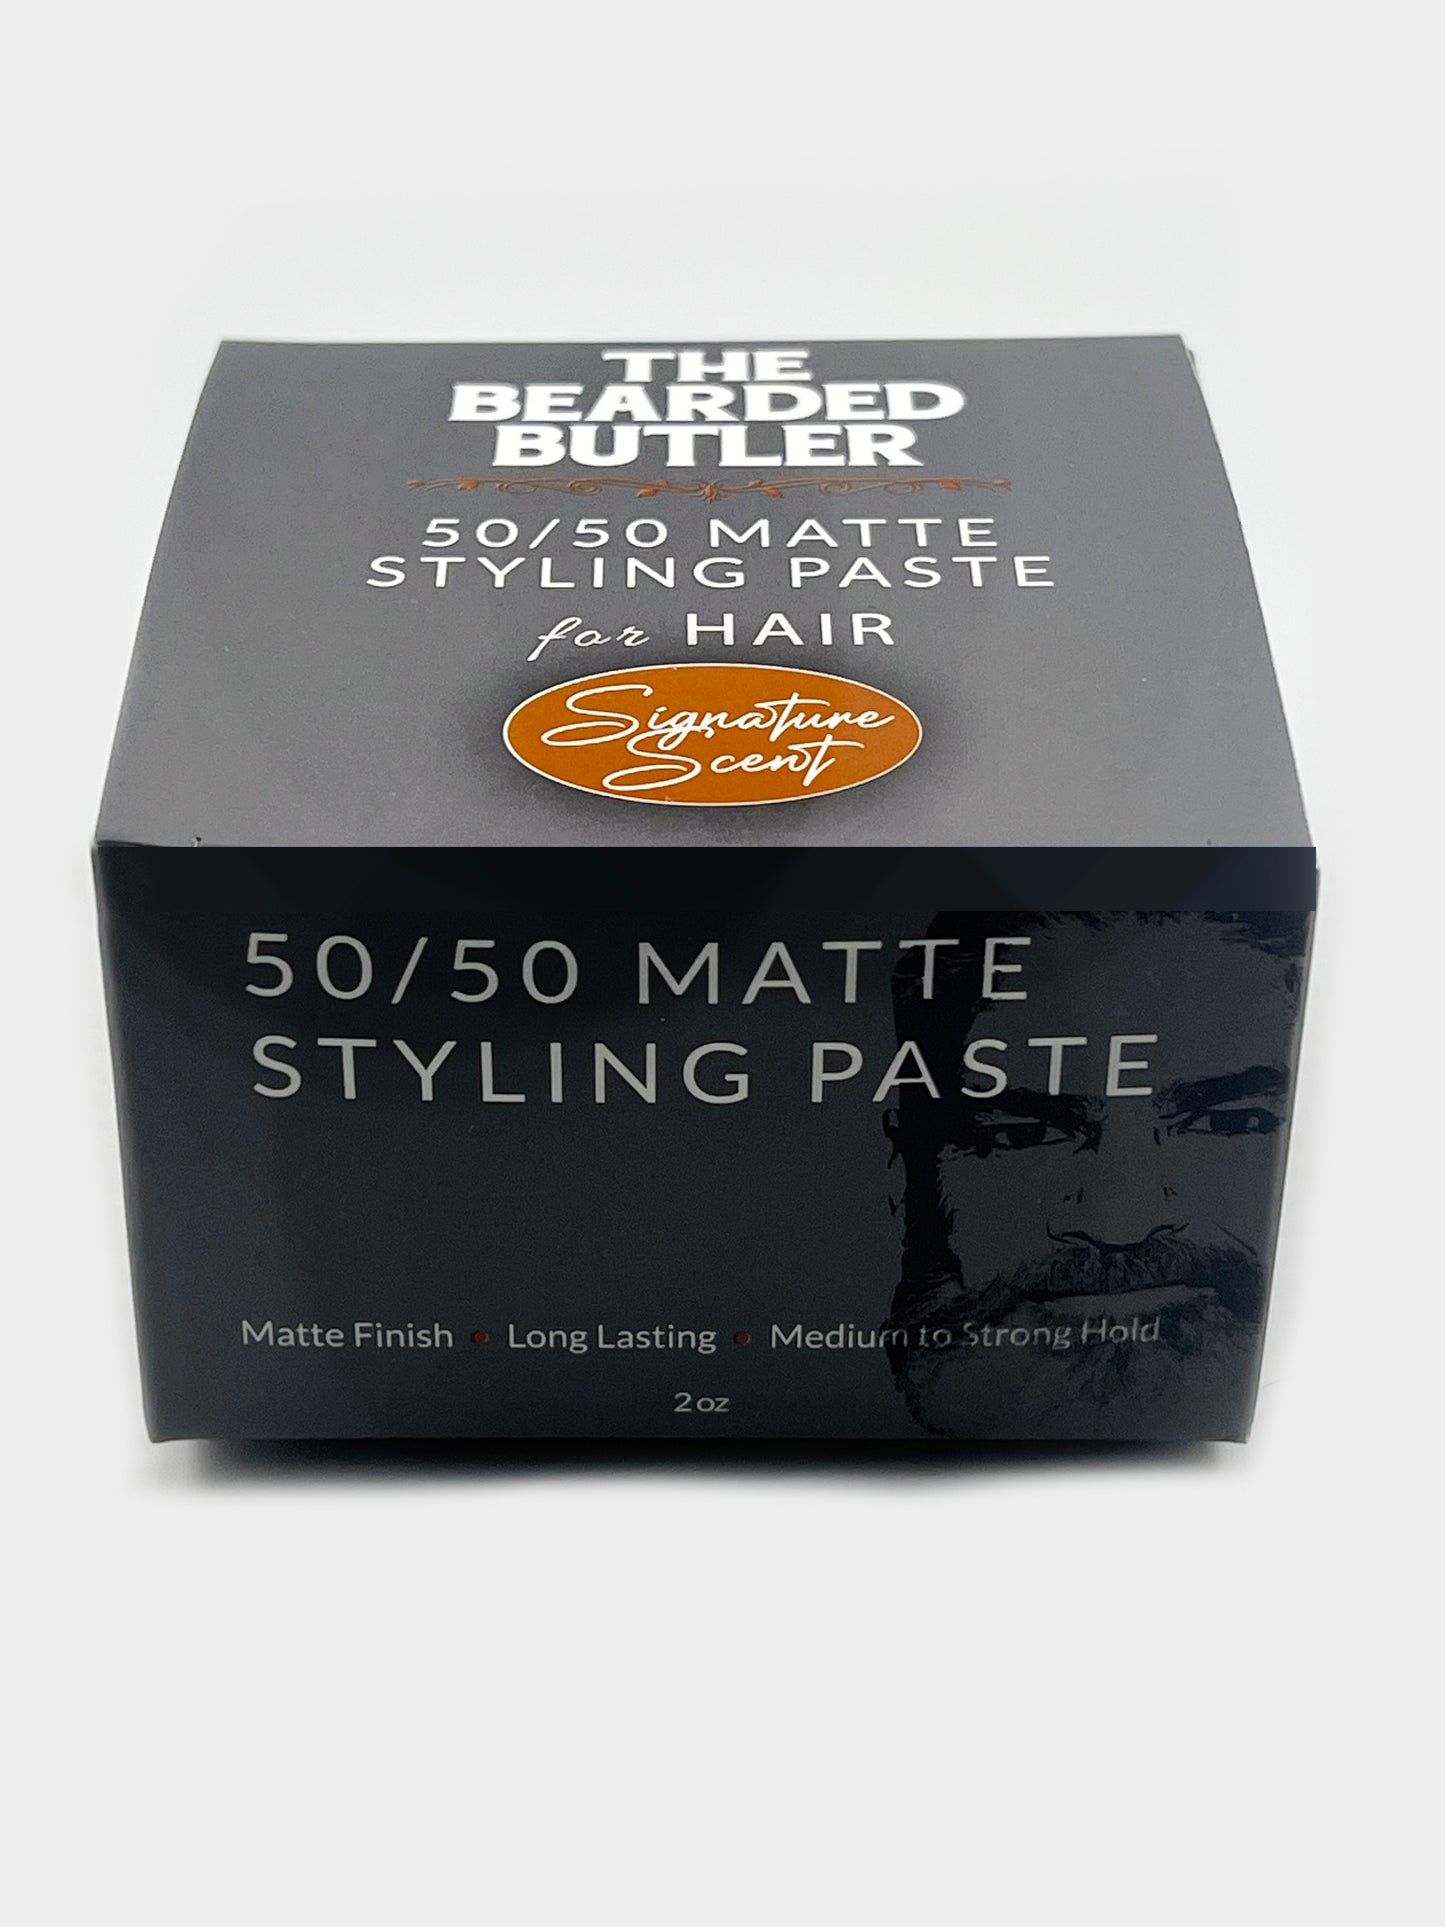 50/50 Matte Styling Paste